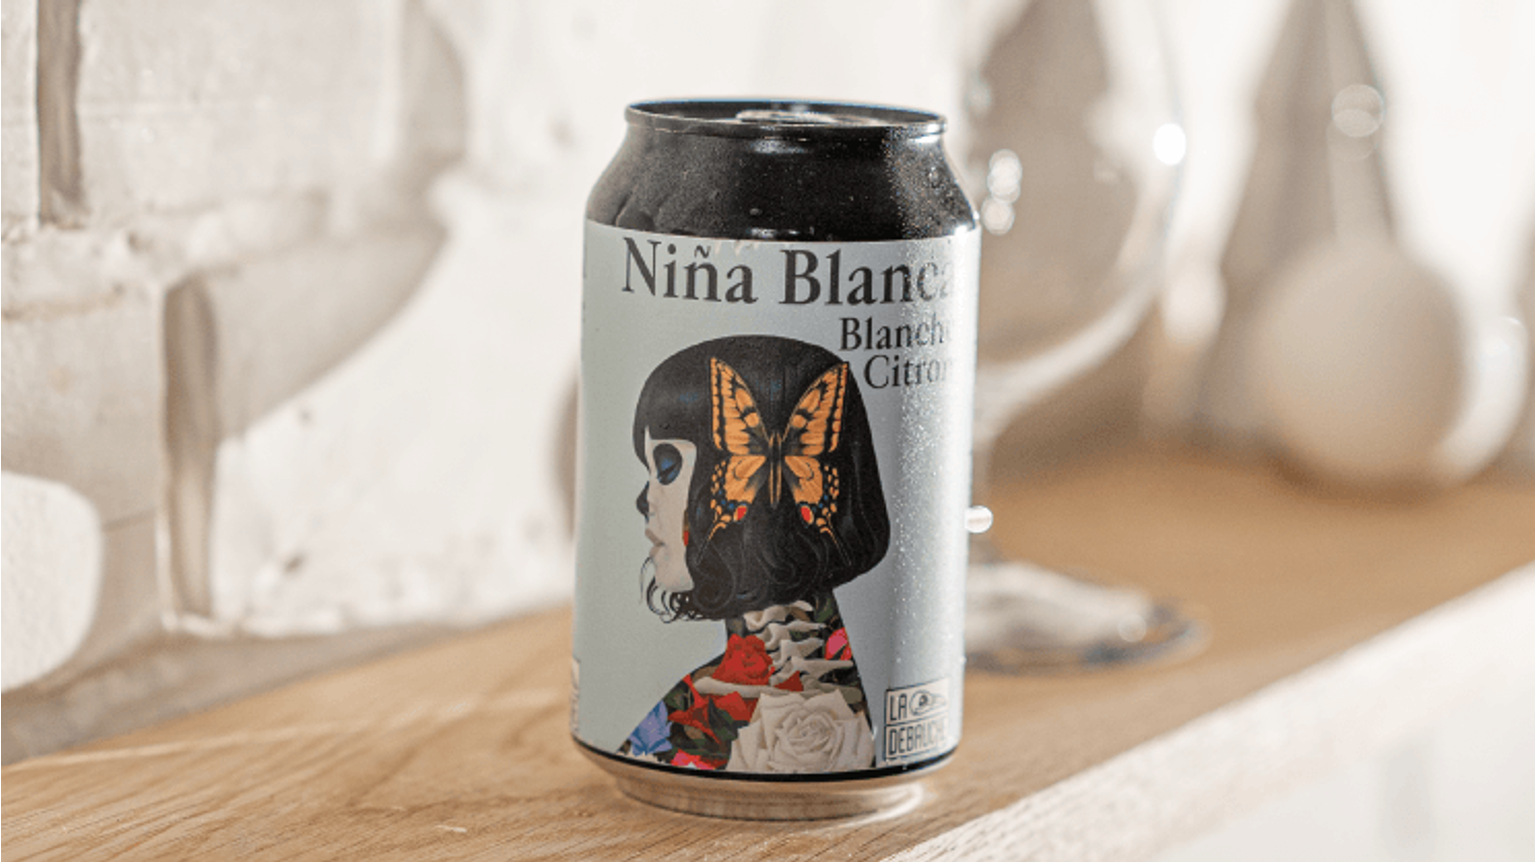 thumbnail for blog article named: Beery Christmas Day 5 : La Débauche Nina Blanca